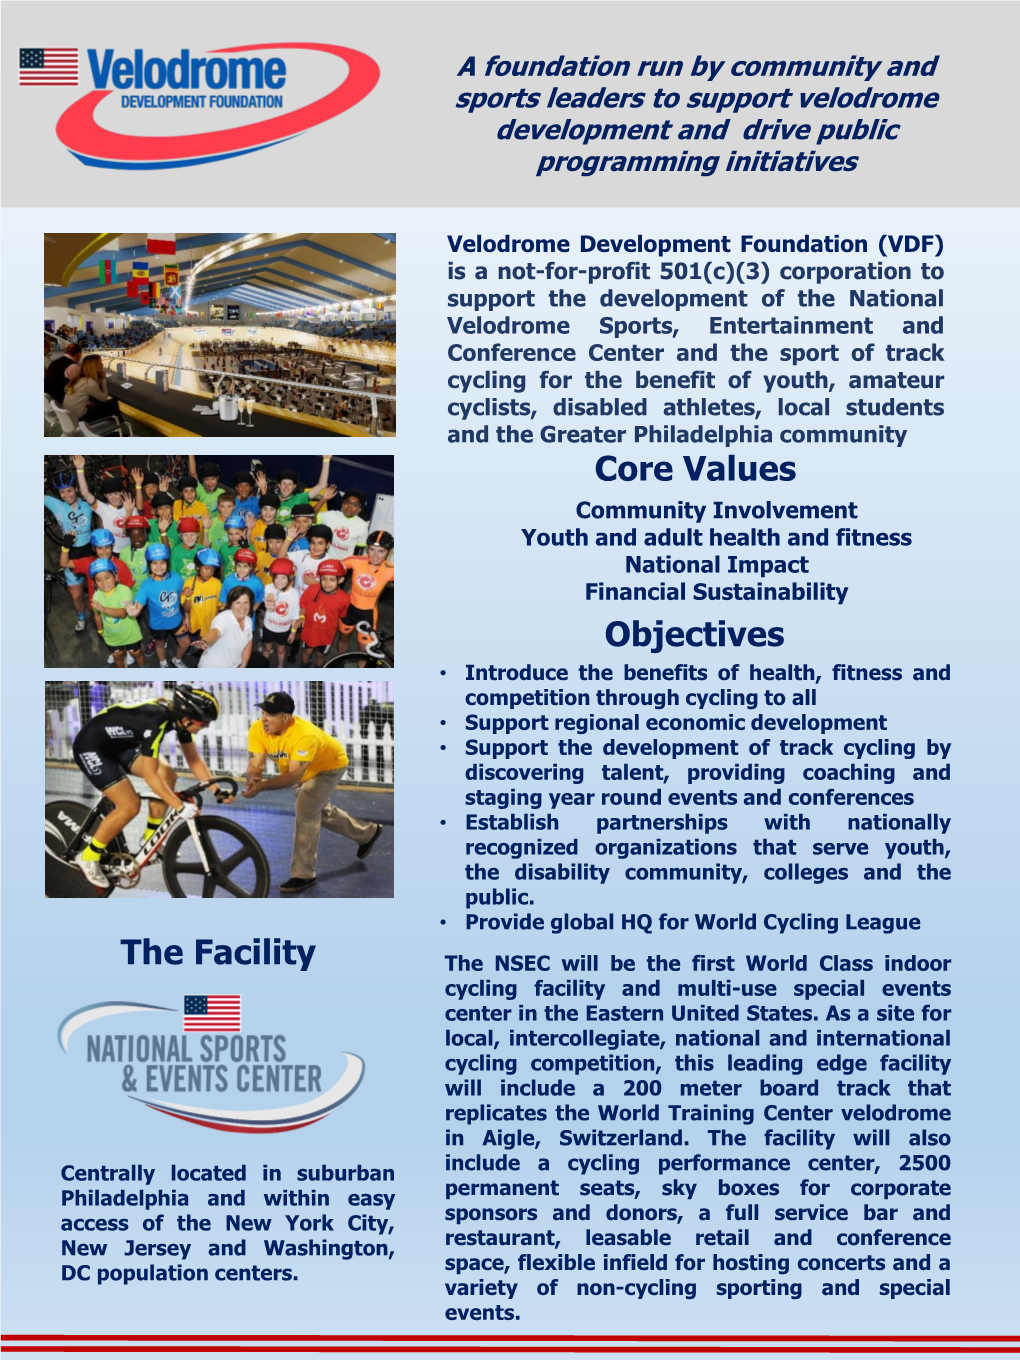 Velodrome Development Foundation Overview